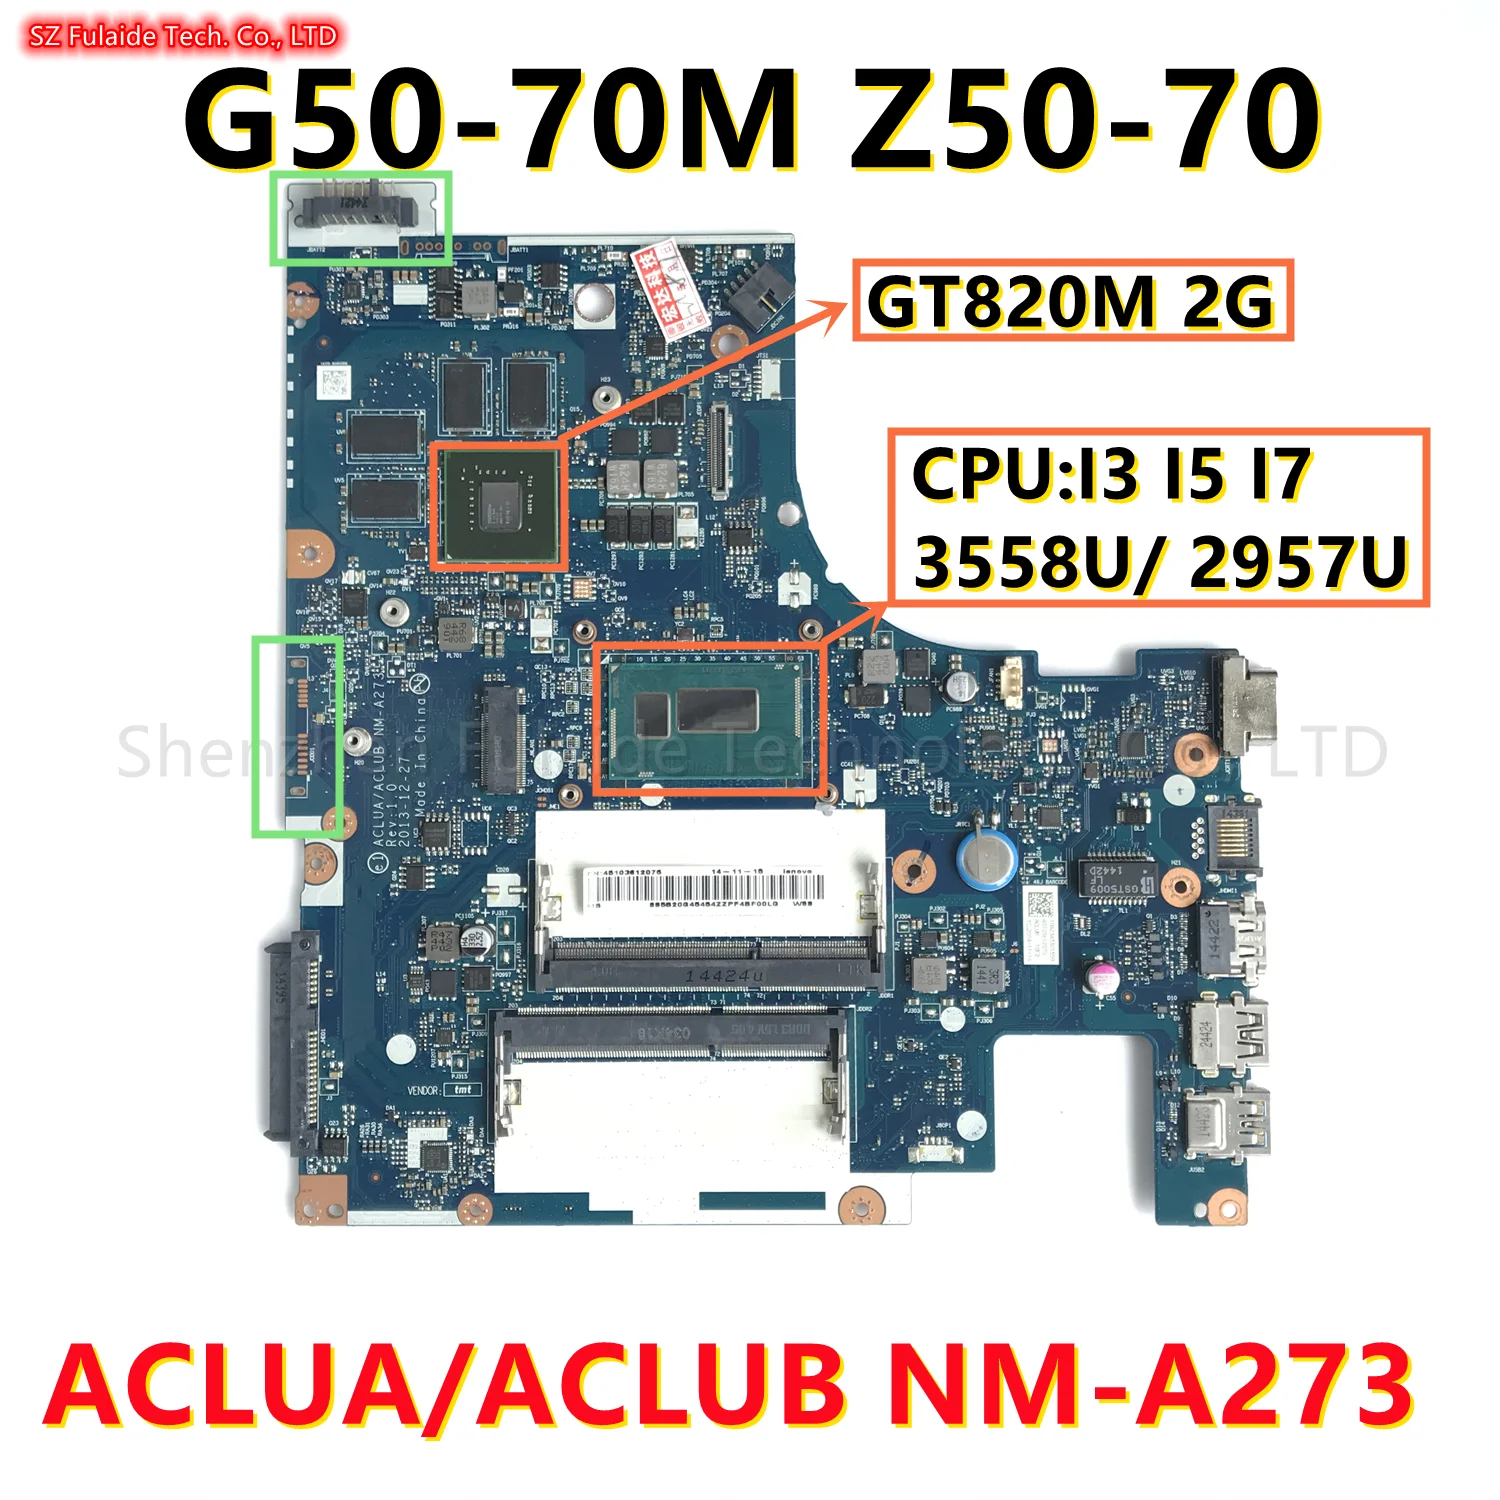 

ACLUA/ACLUB NM-A273 For Lenovo G50-70M Z50-70 Laptop Motherboard With i3 i5 i7 3558U/ 2957U CPU GT820M 2G GPU 100% Tested